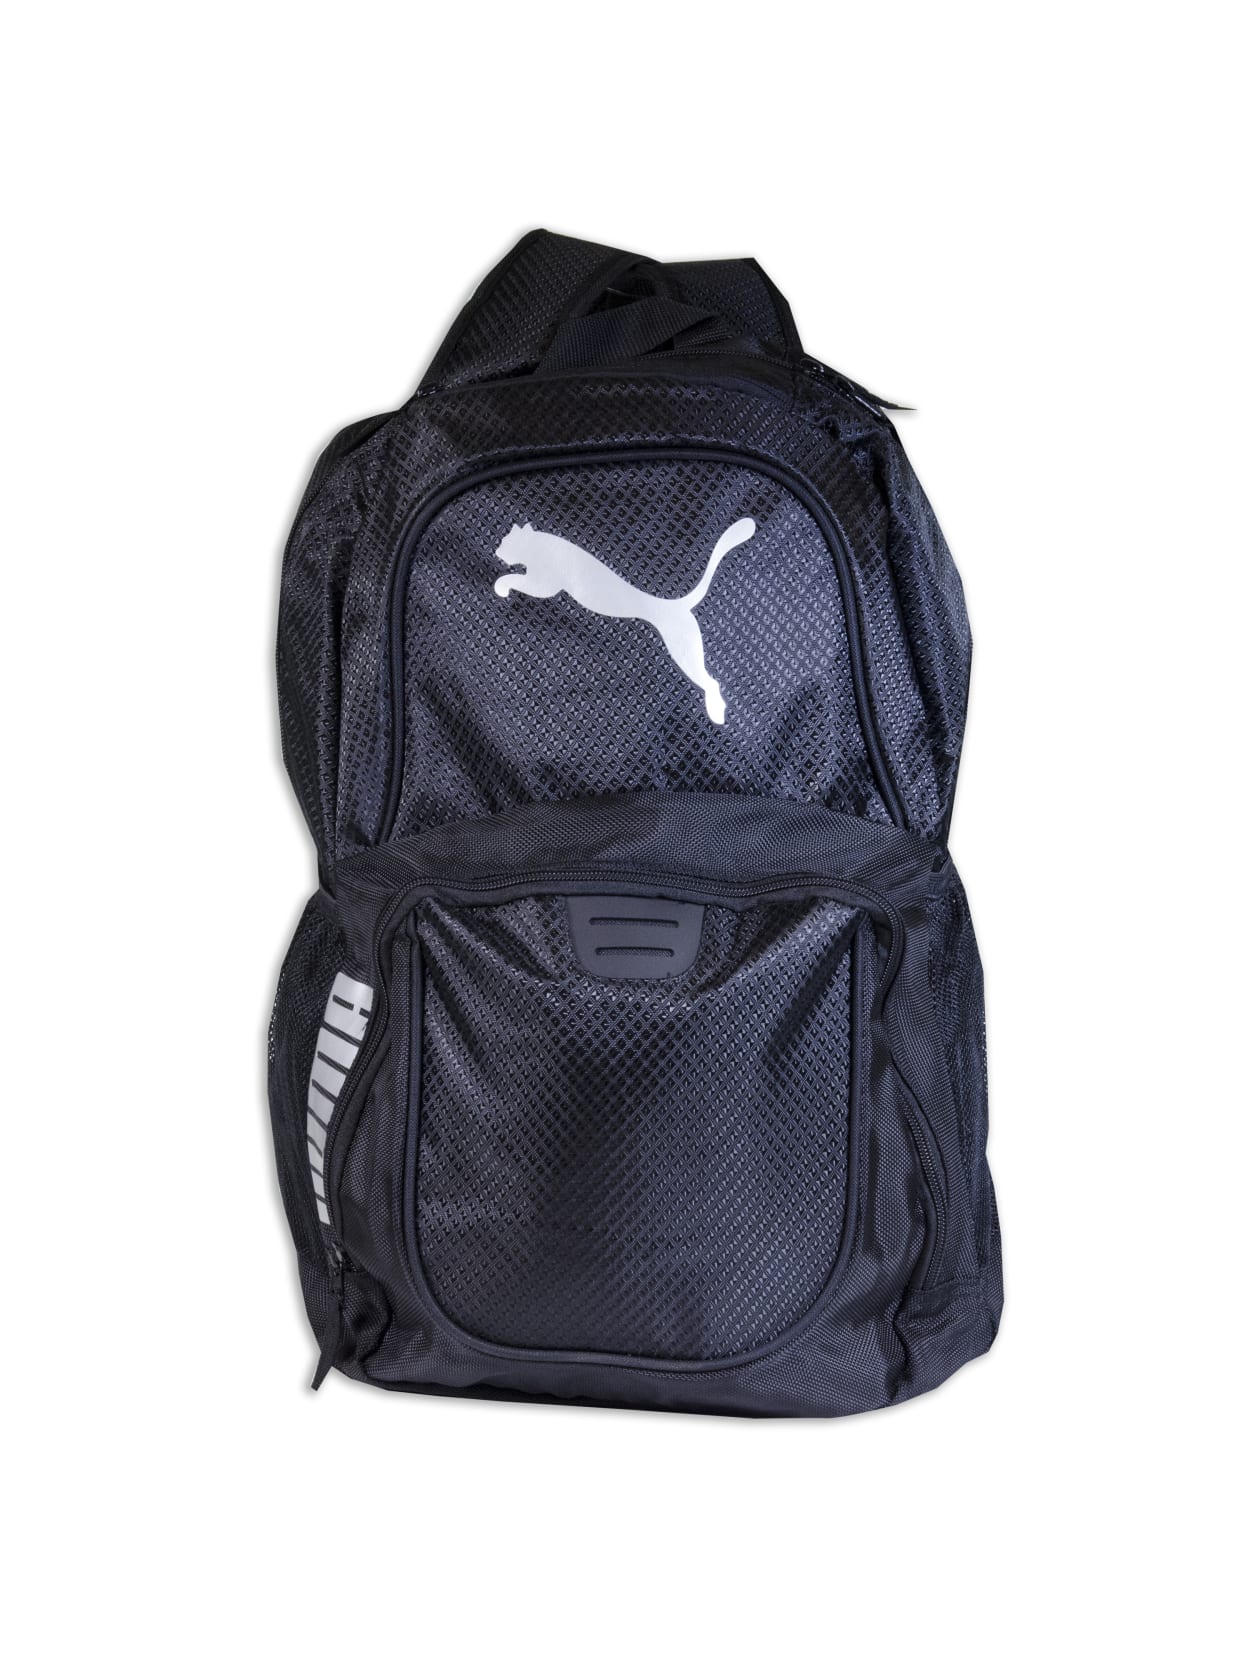 puma backpack warranty